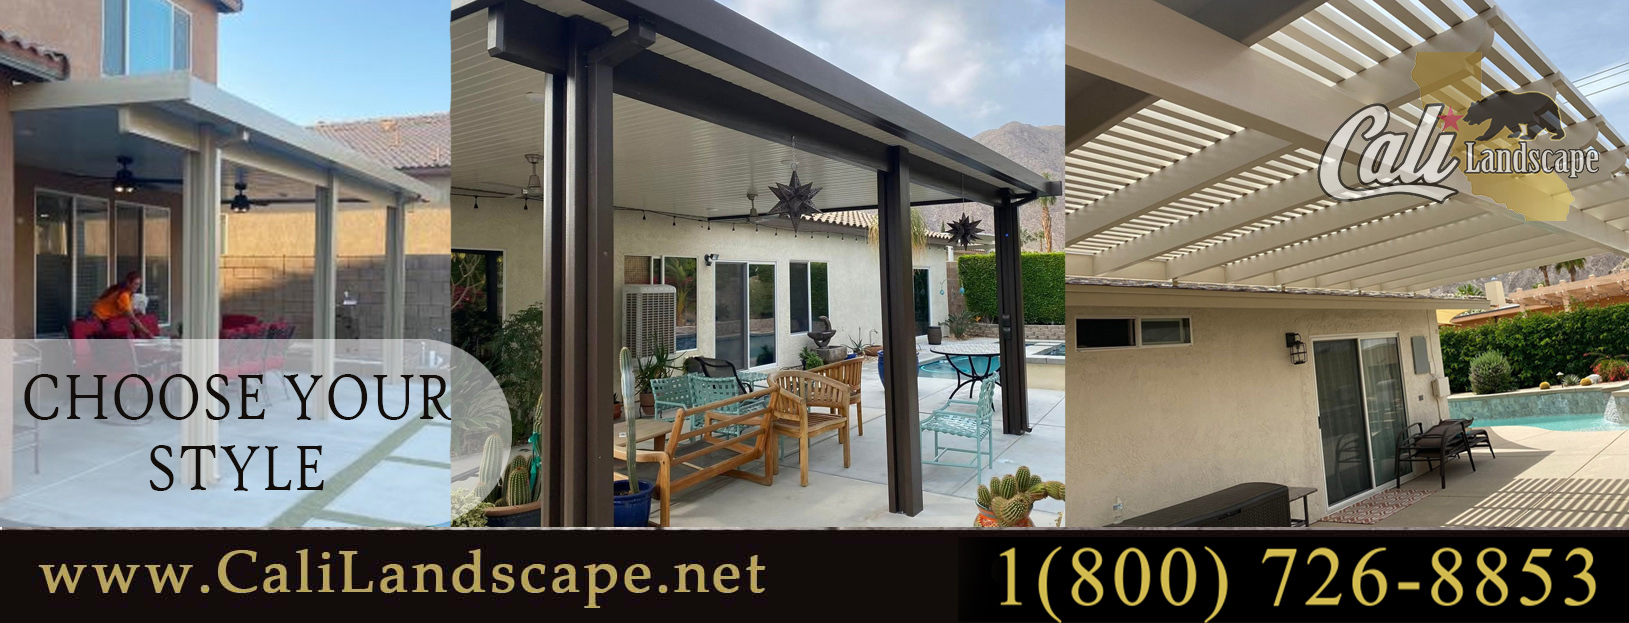 Cali Landscape Concrete Patio Covers Alumawood Solid or lattice Contractor in Corona buy sell repair Menifee Ca